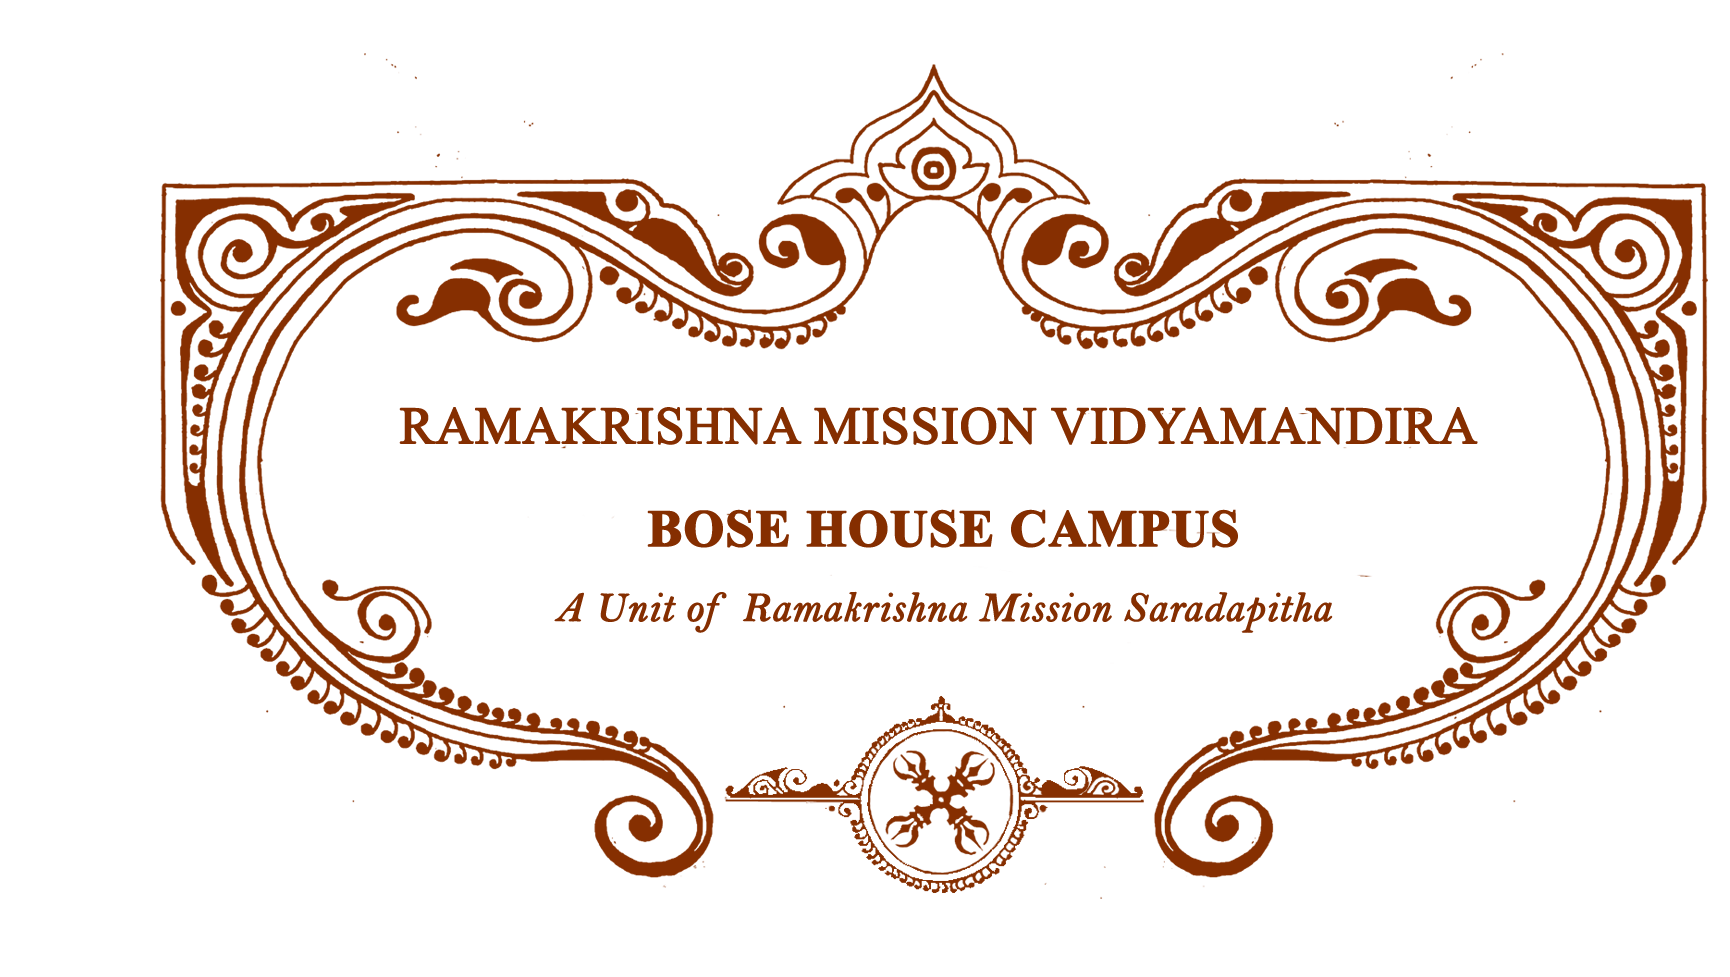 ramkrishna mission bose house campus logo